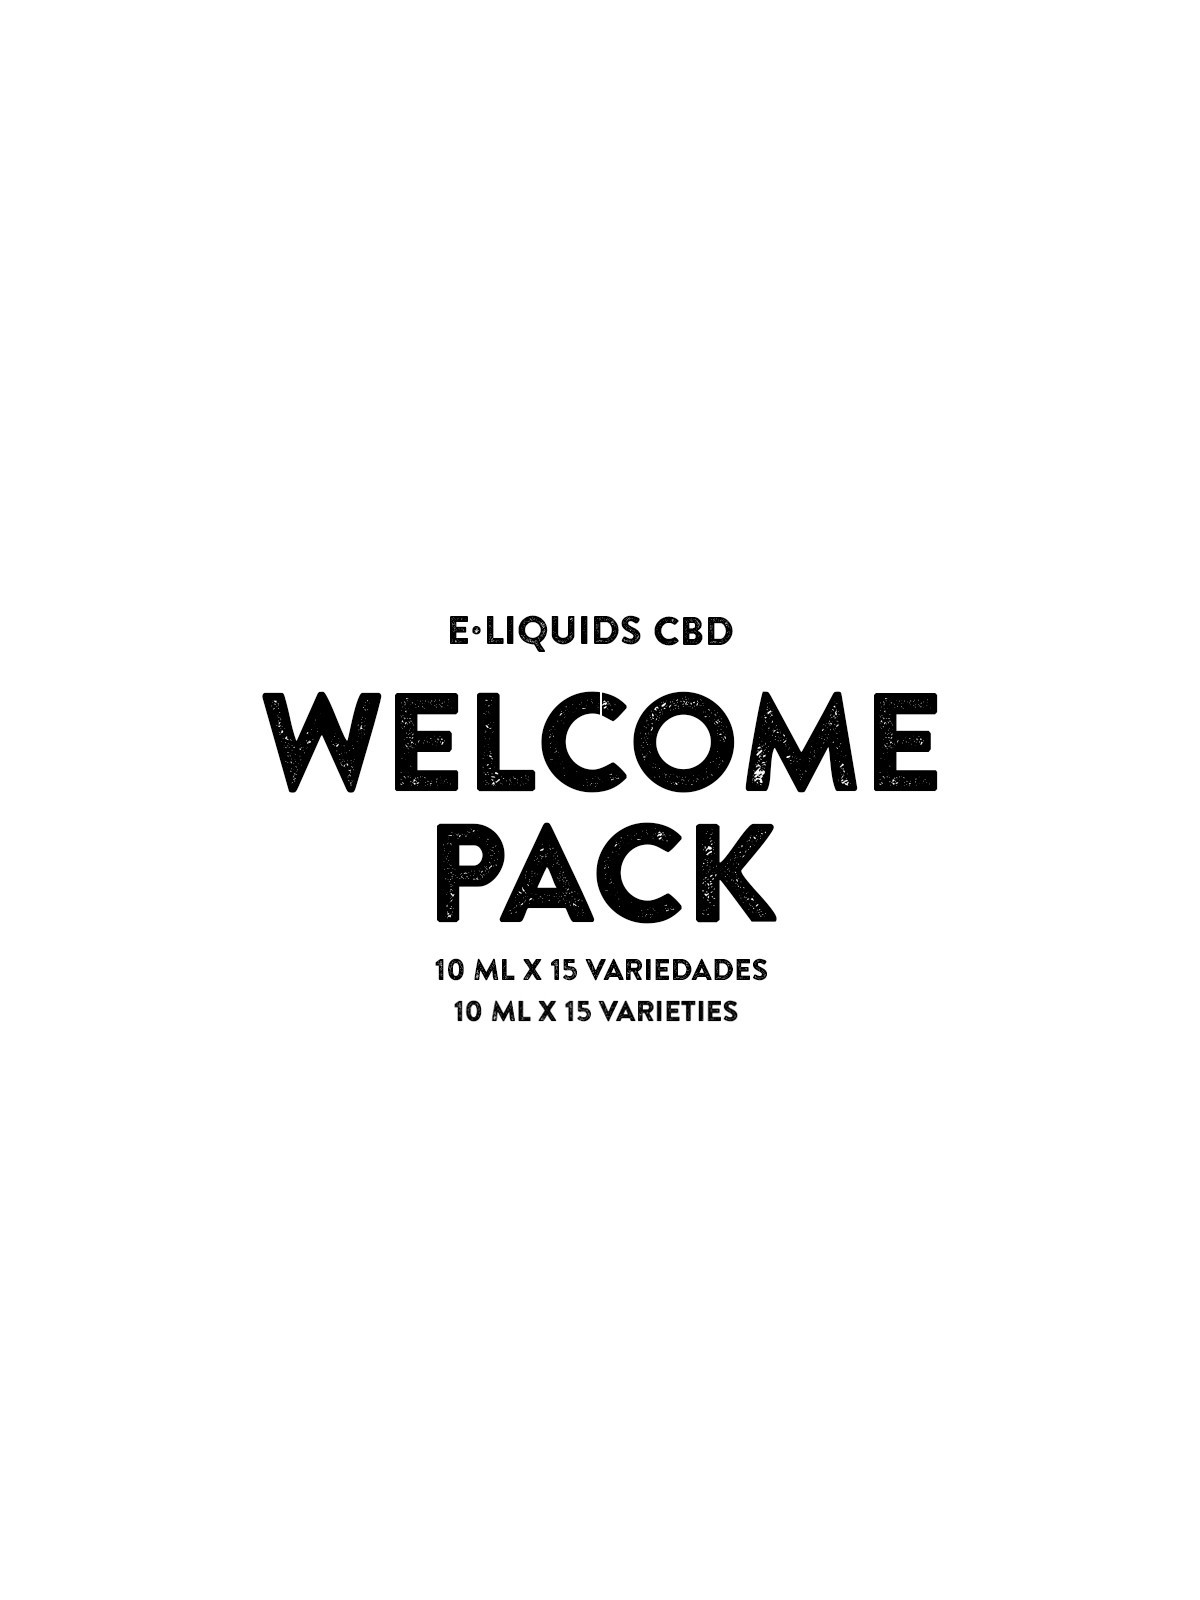 Welcome pack CBD e-liquid - Cali Terpenes